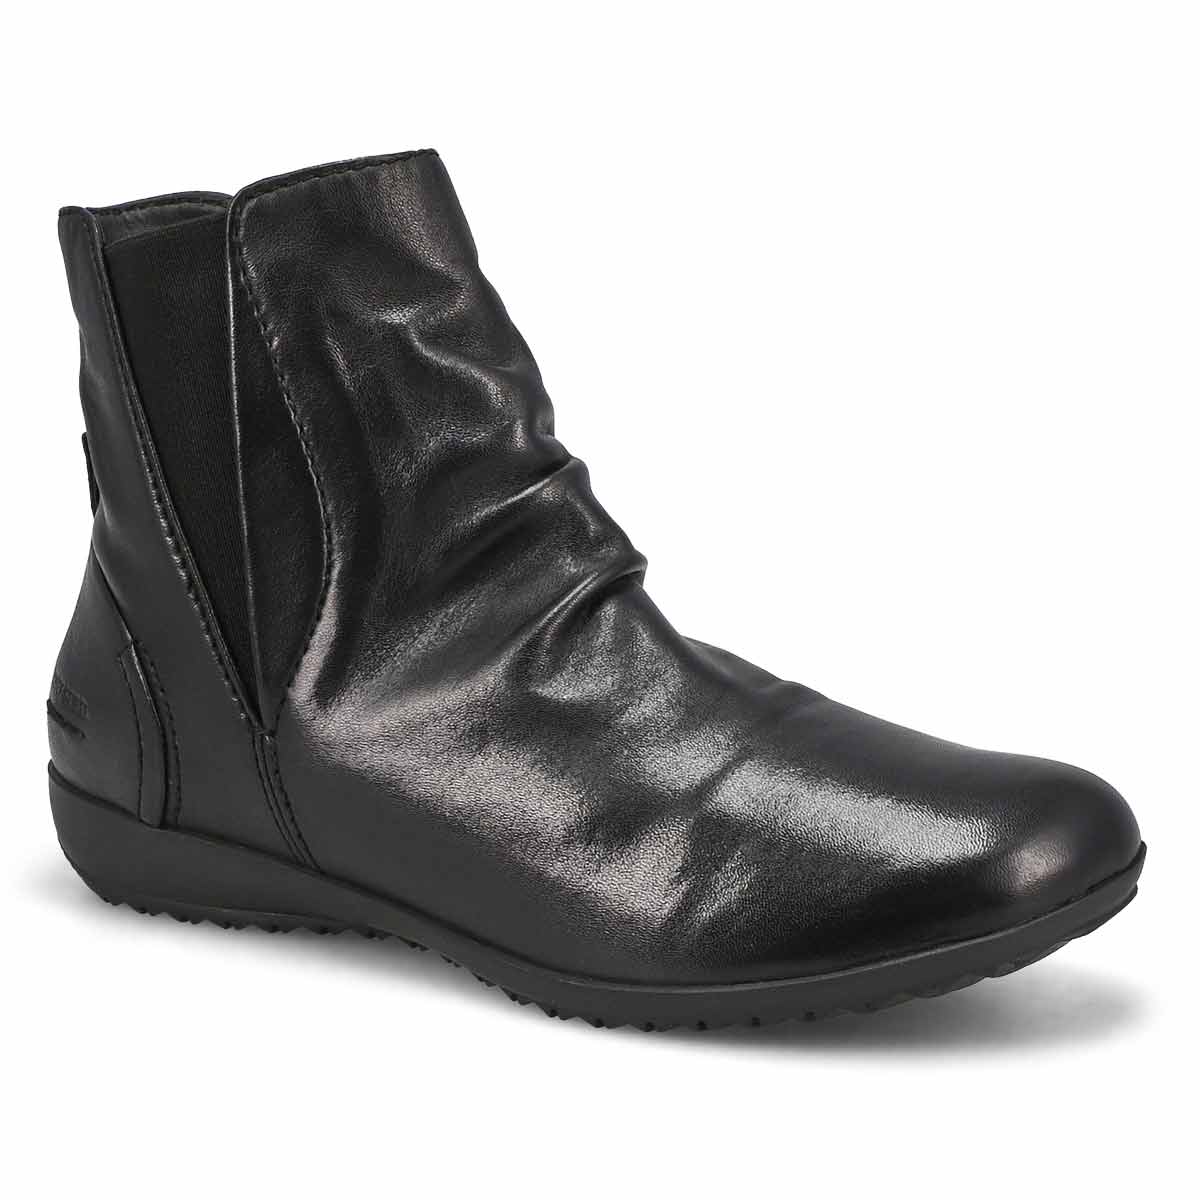 Josef Seibel Women's Naly 66 Leather Ankle Bo | SoftMoc.com